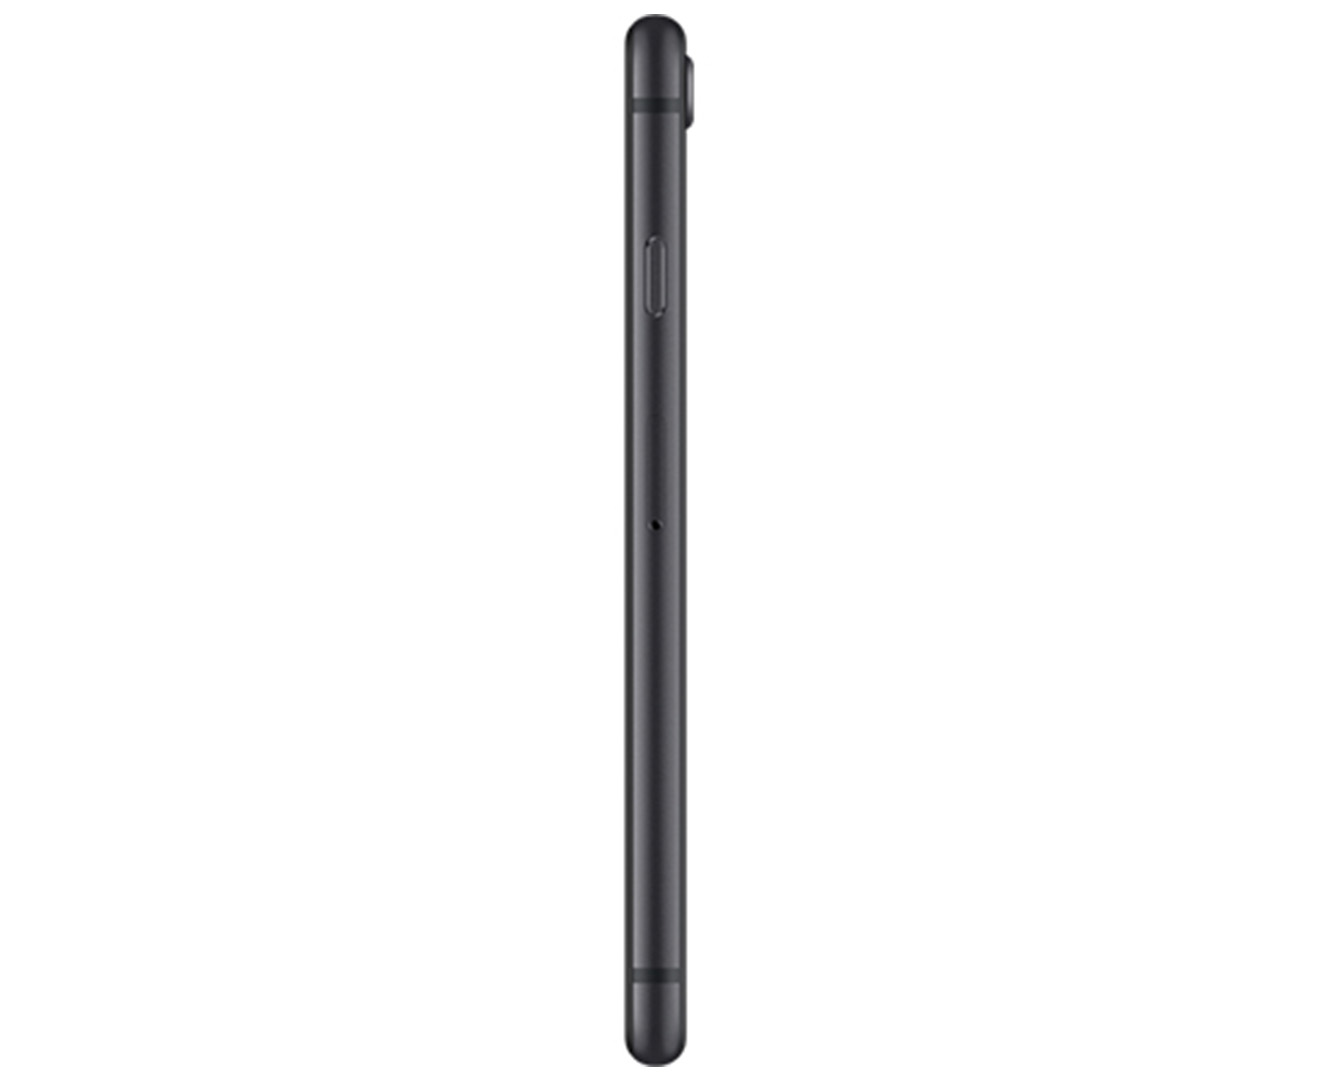 Apple iPhone 8 64GB Smartphone Unlocked - Space Grey | Catch.com.au